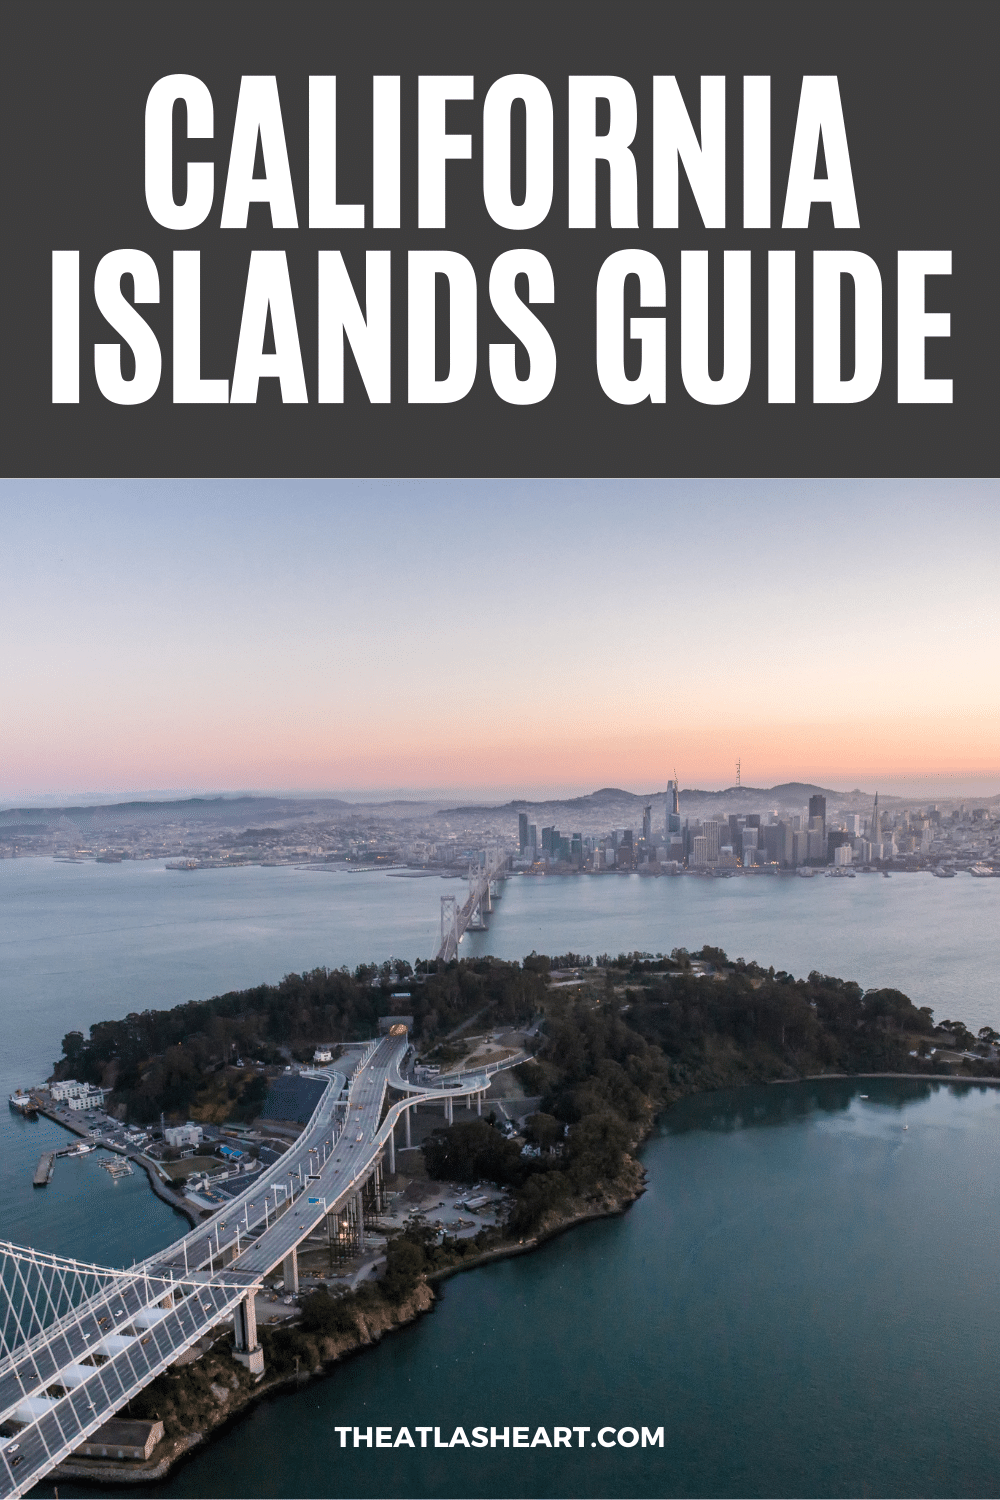 California Islands Guide: 16 Beautiful & Unique Islands in the Golden State